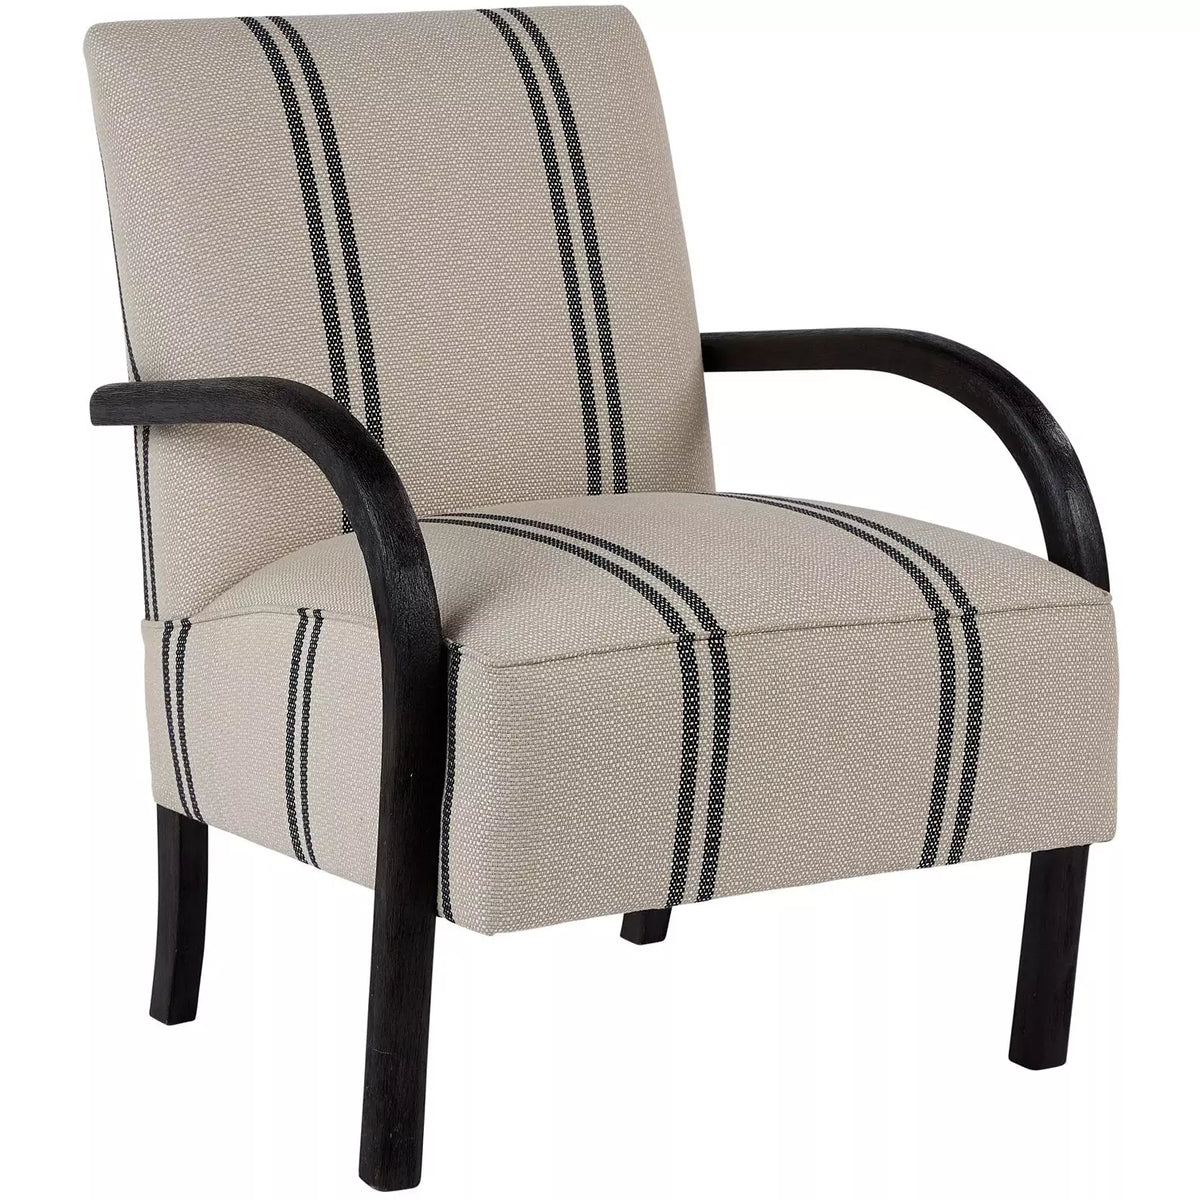 Bahia Honda Accent Chair - Be Bold Furniture